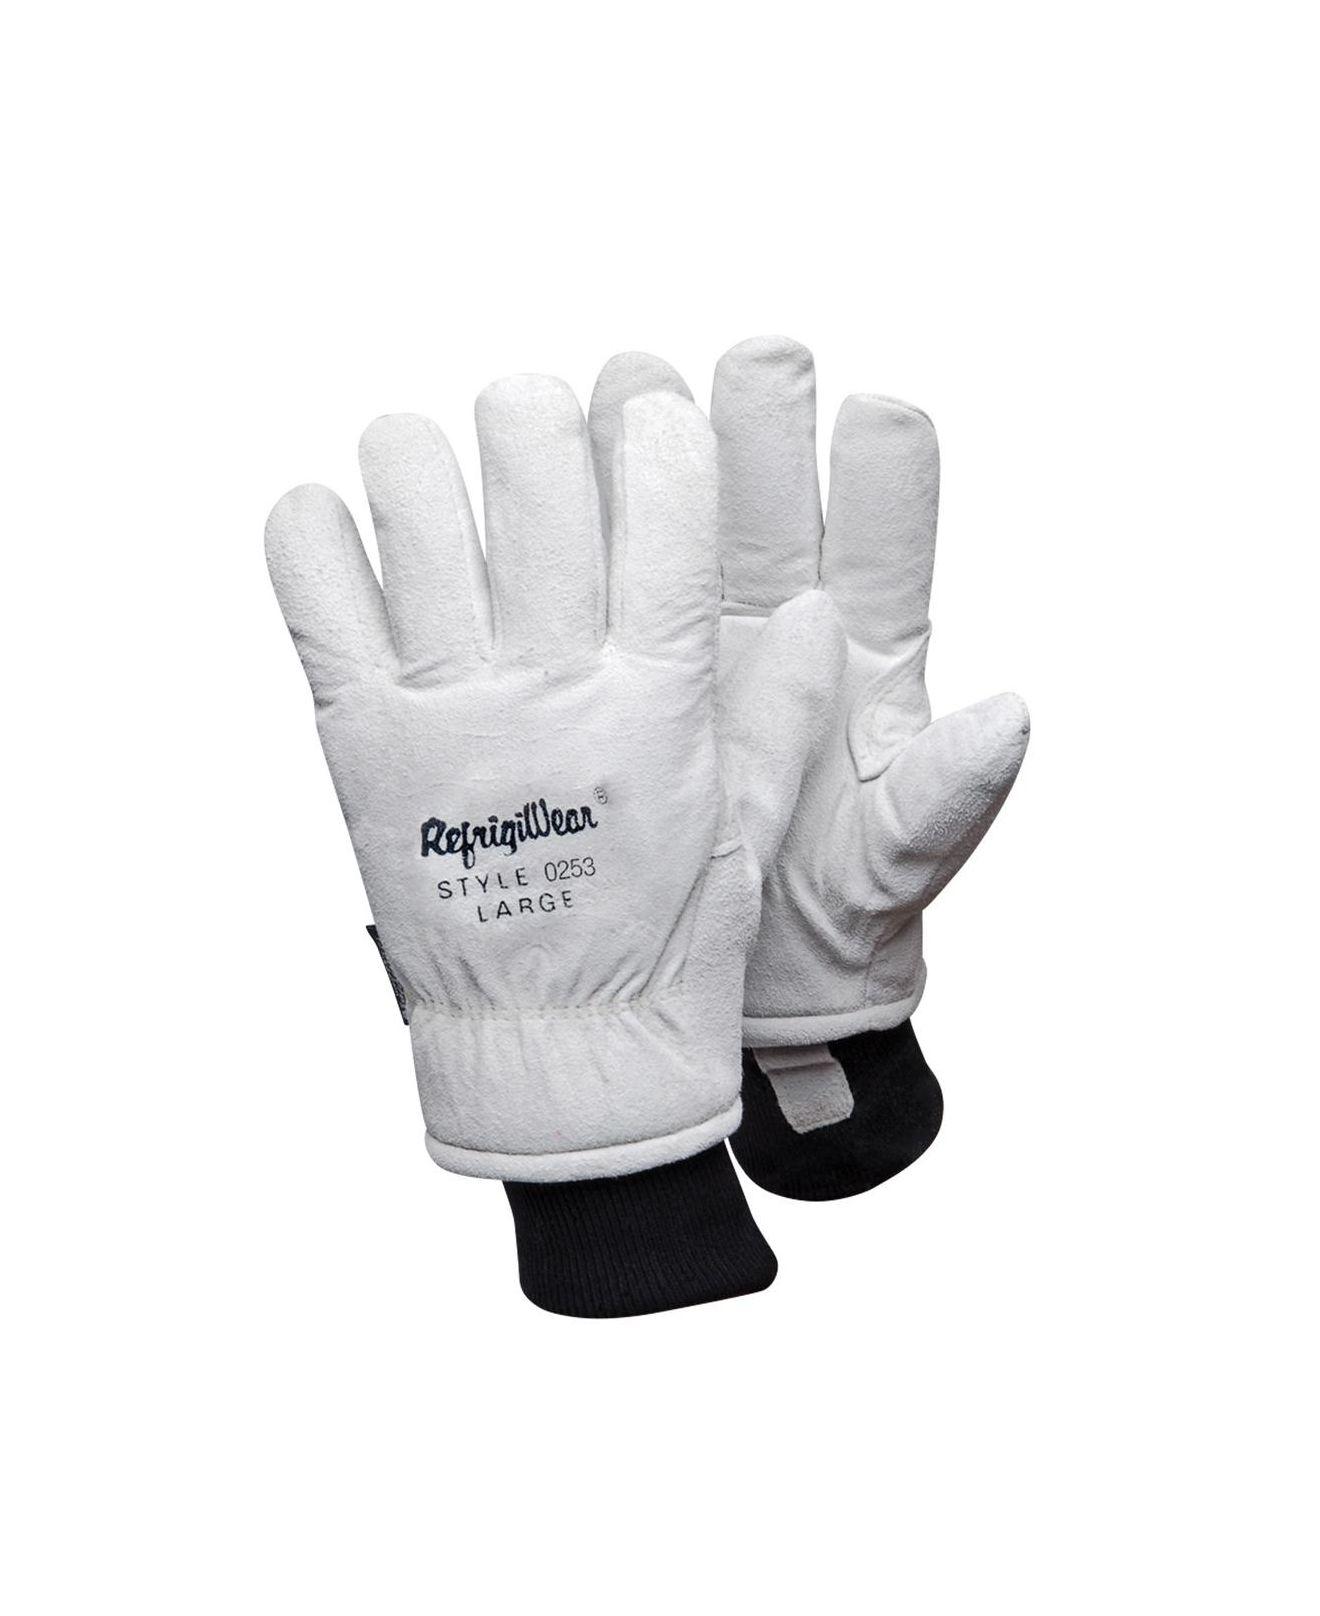 https://cdna.lystit.com/photos/macys/fec25d93/refrigiwear-White-Warm-Fiberfill-Insulated-Tricot-Lined-Leather-Work-Gloves.jpeg